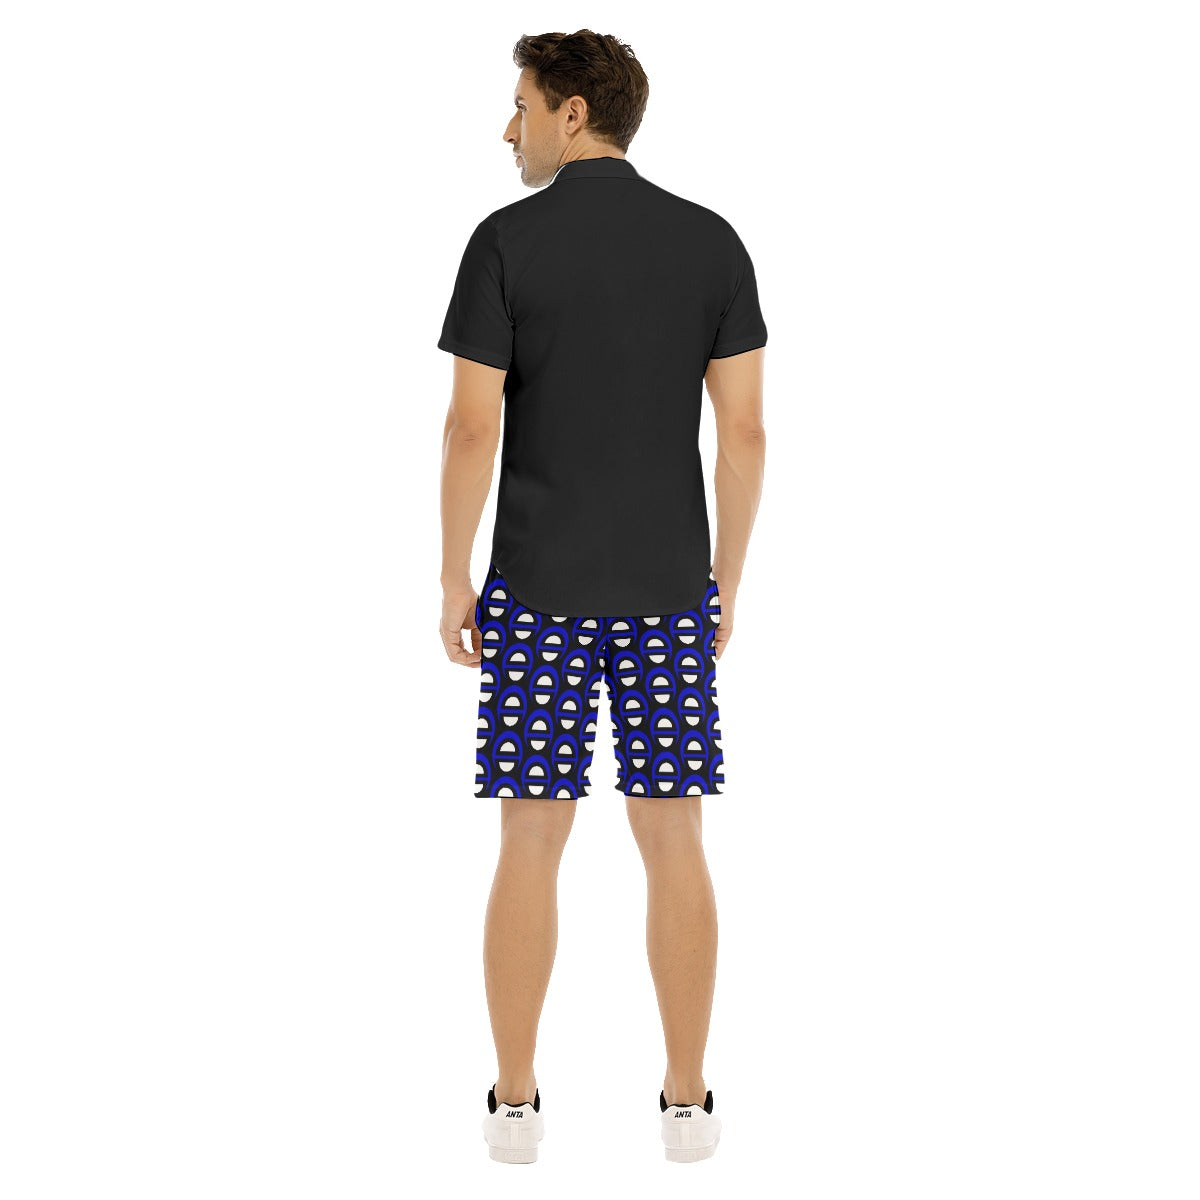 Origen Destination |On-Arrival Point of Origen Blu-Light Men's Short Sleeve Shirt Sets